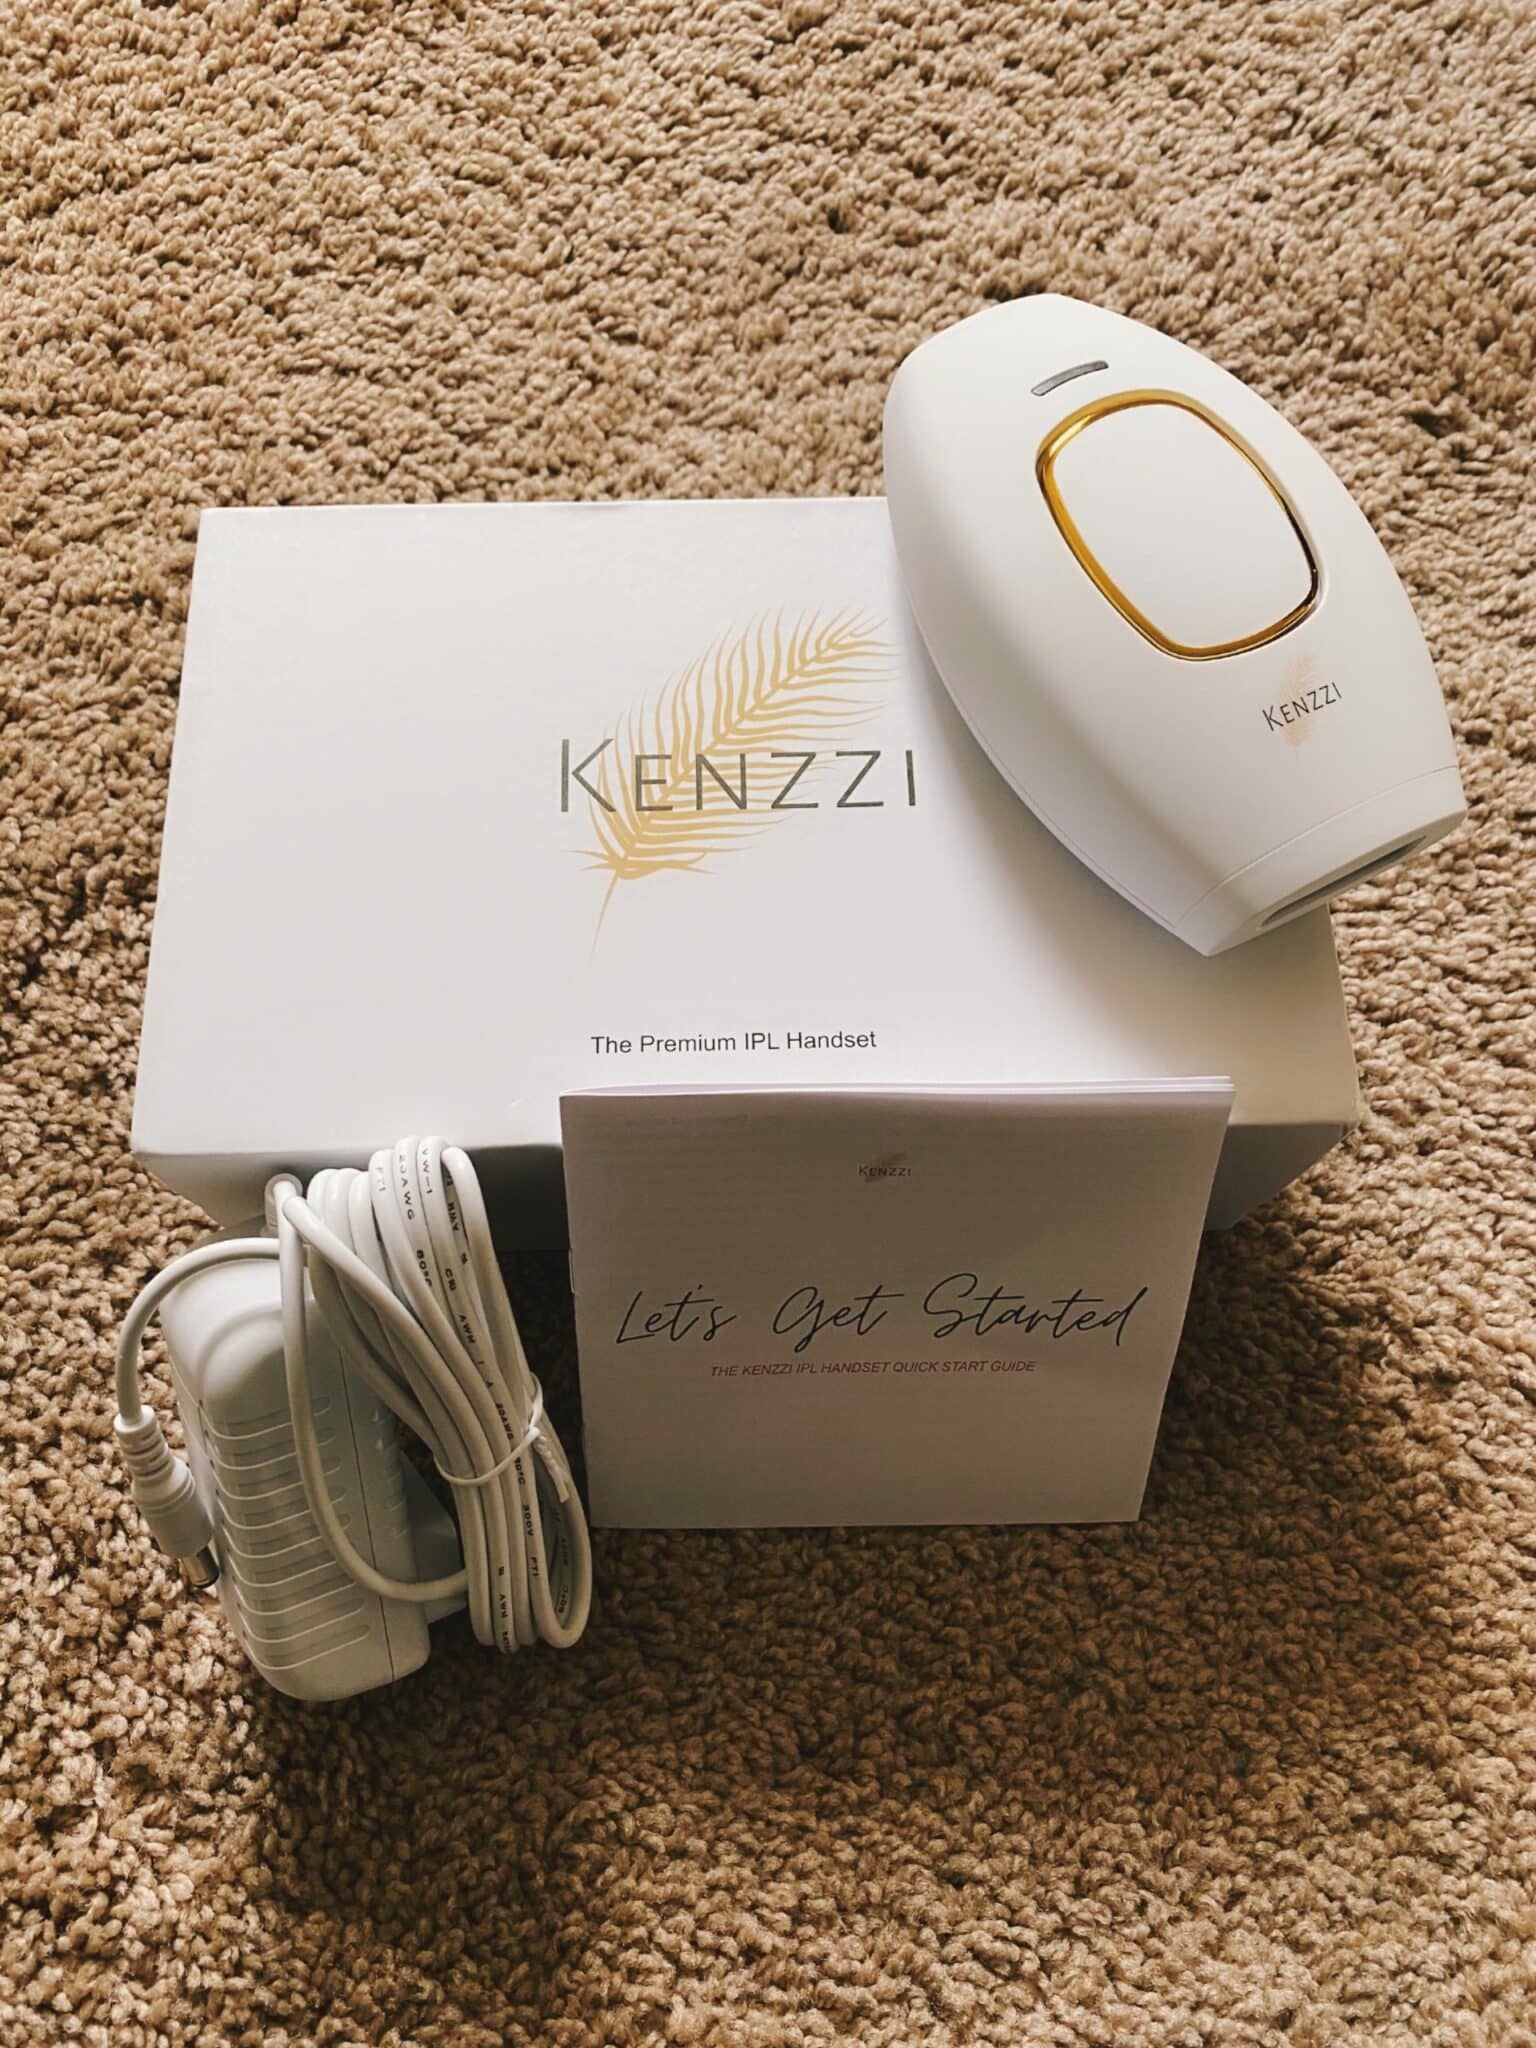 We Tested Kenzzi IPL Hair Removal Handset